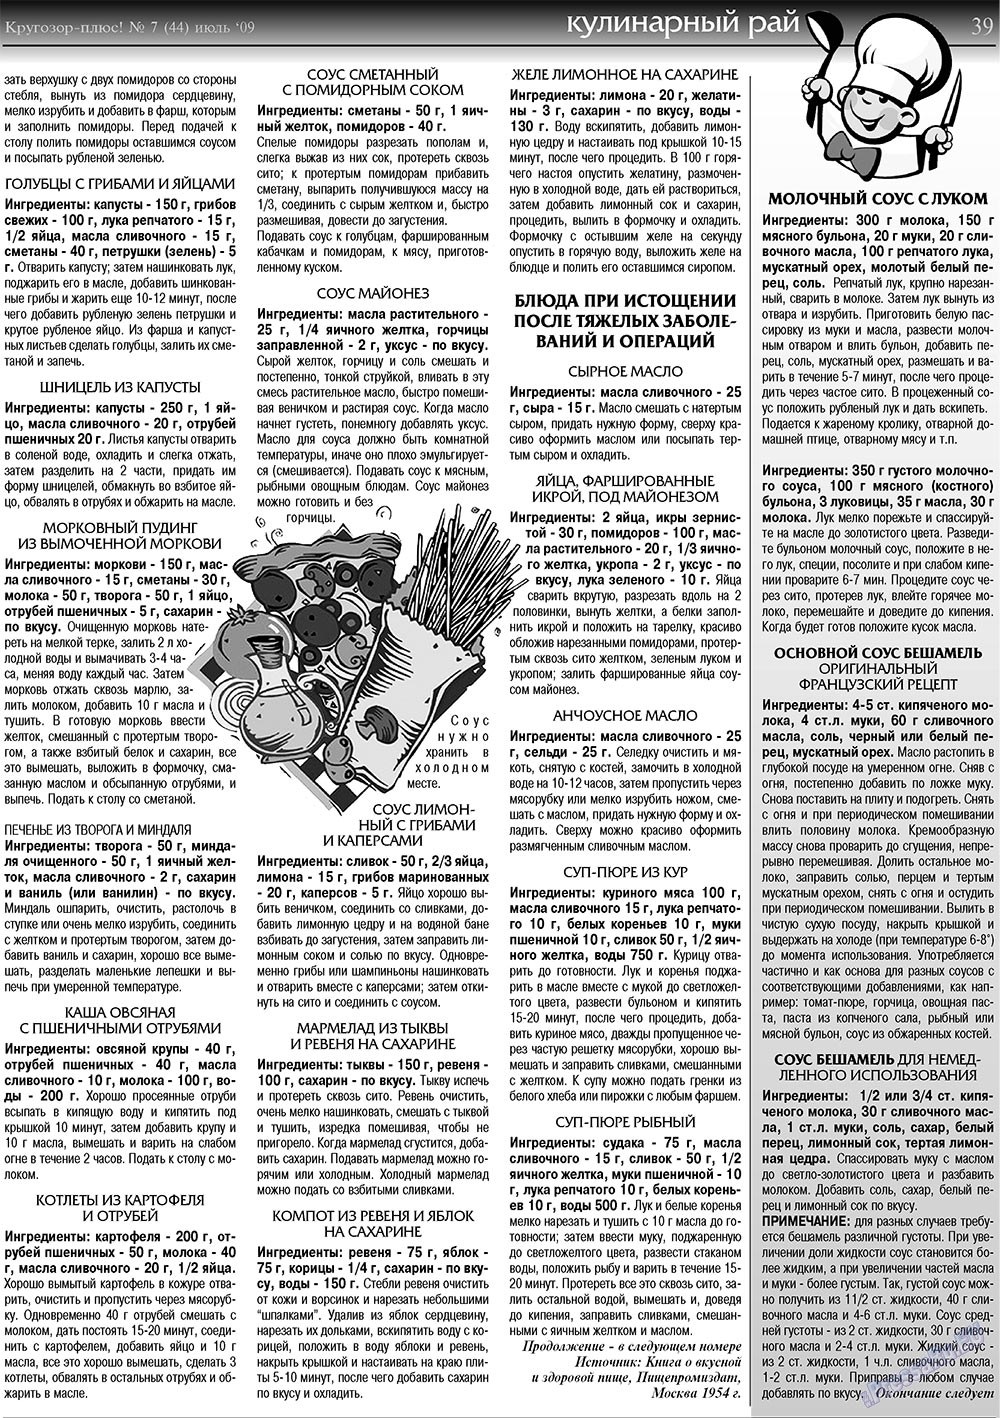 Кругозор плюс! (газета). 2009 год, номер 7, стр. 39